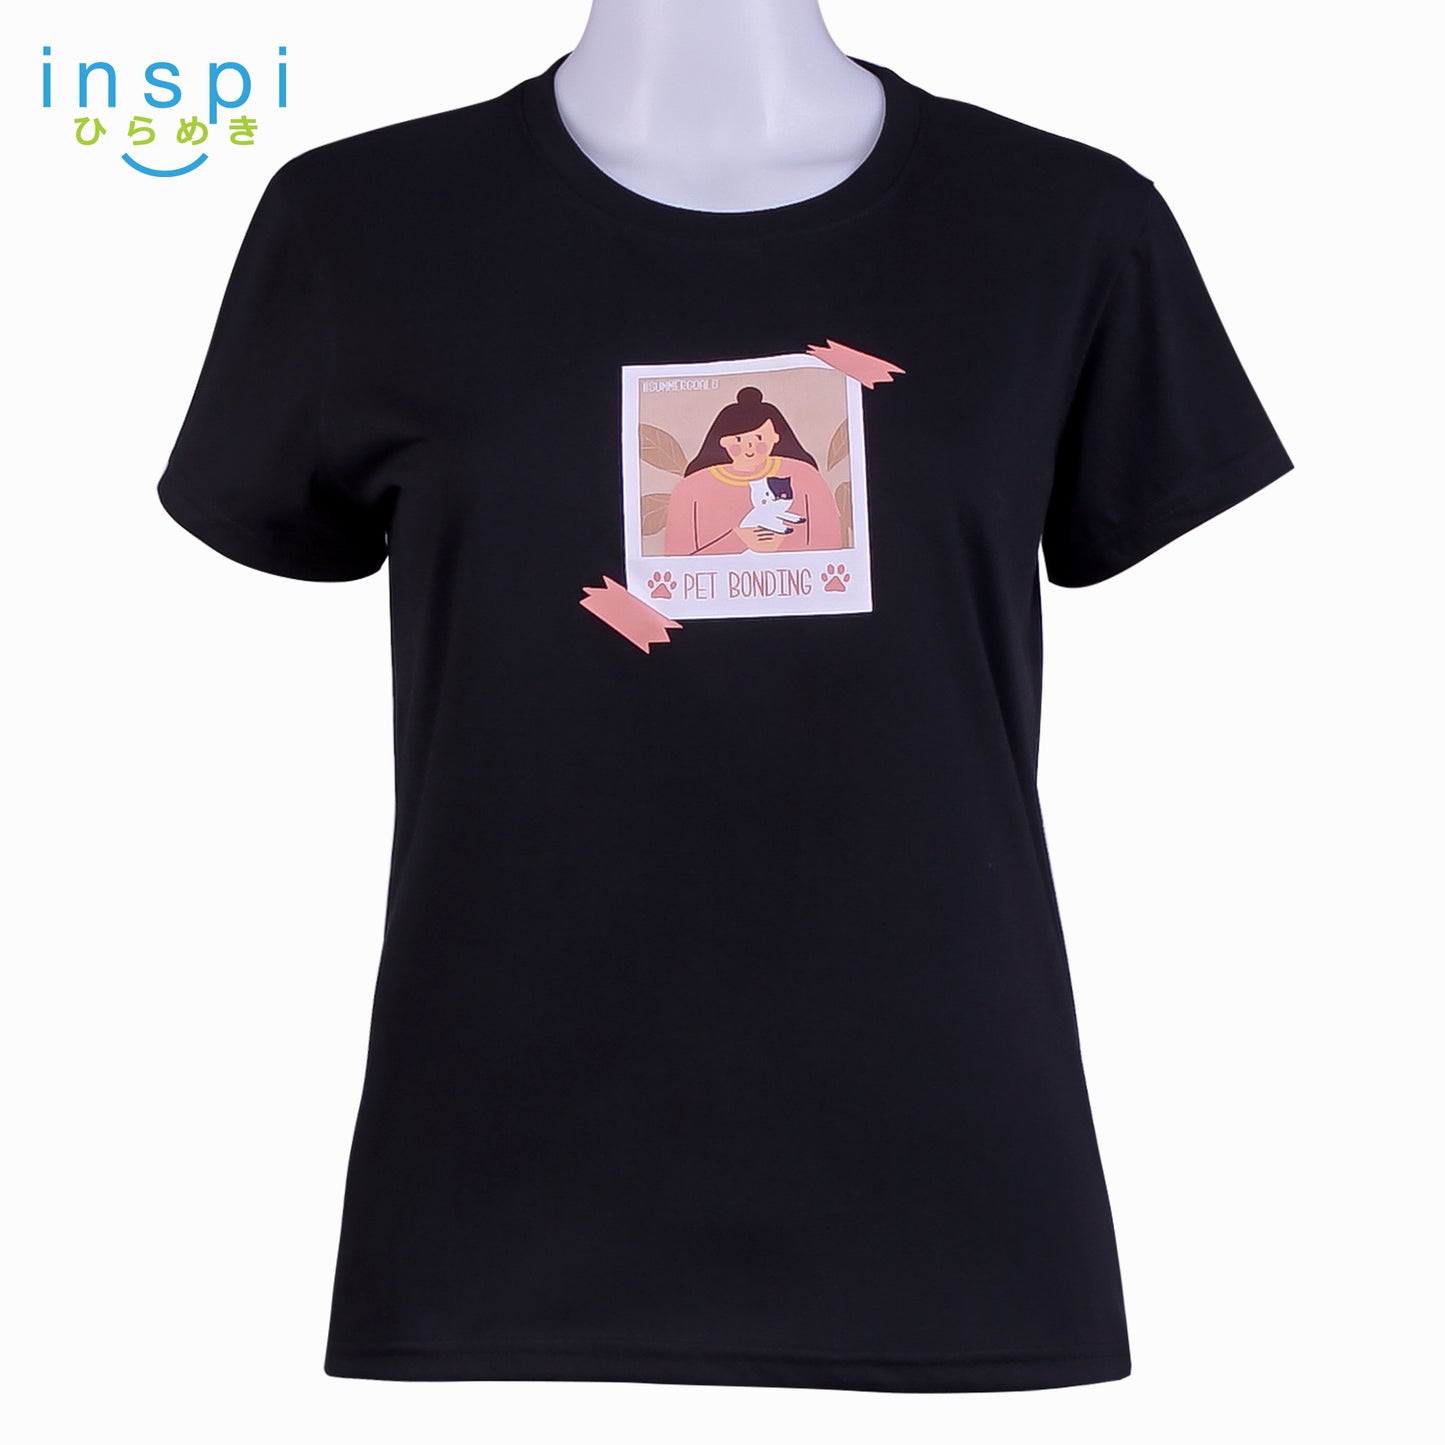 INSPI Tees Ladies Loose Fit Pet Bonding Graphic Tshirt